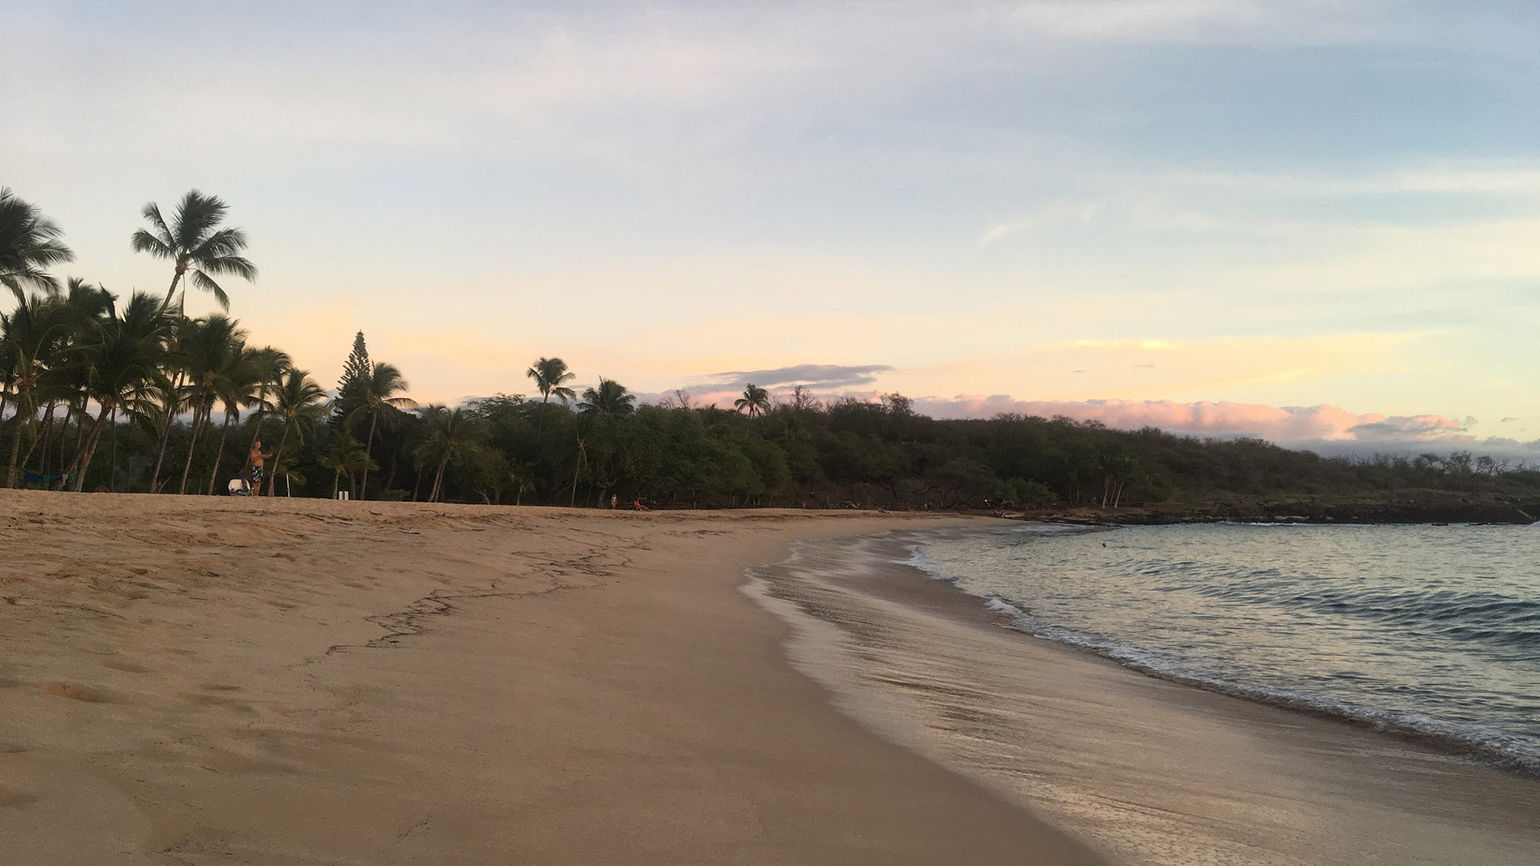 Introducing Travel Weekly’s new Hawaii editor, Christine Hitt: Travel Weekly